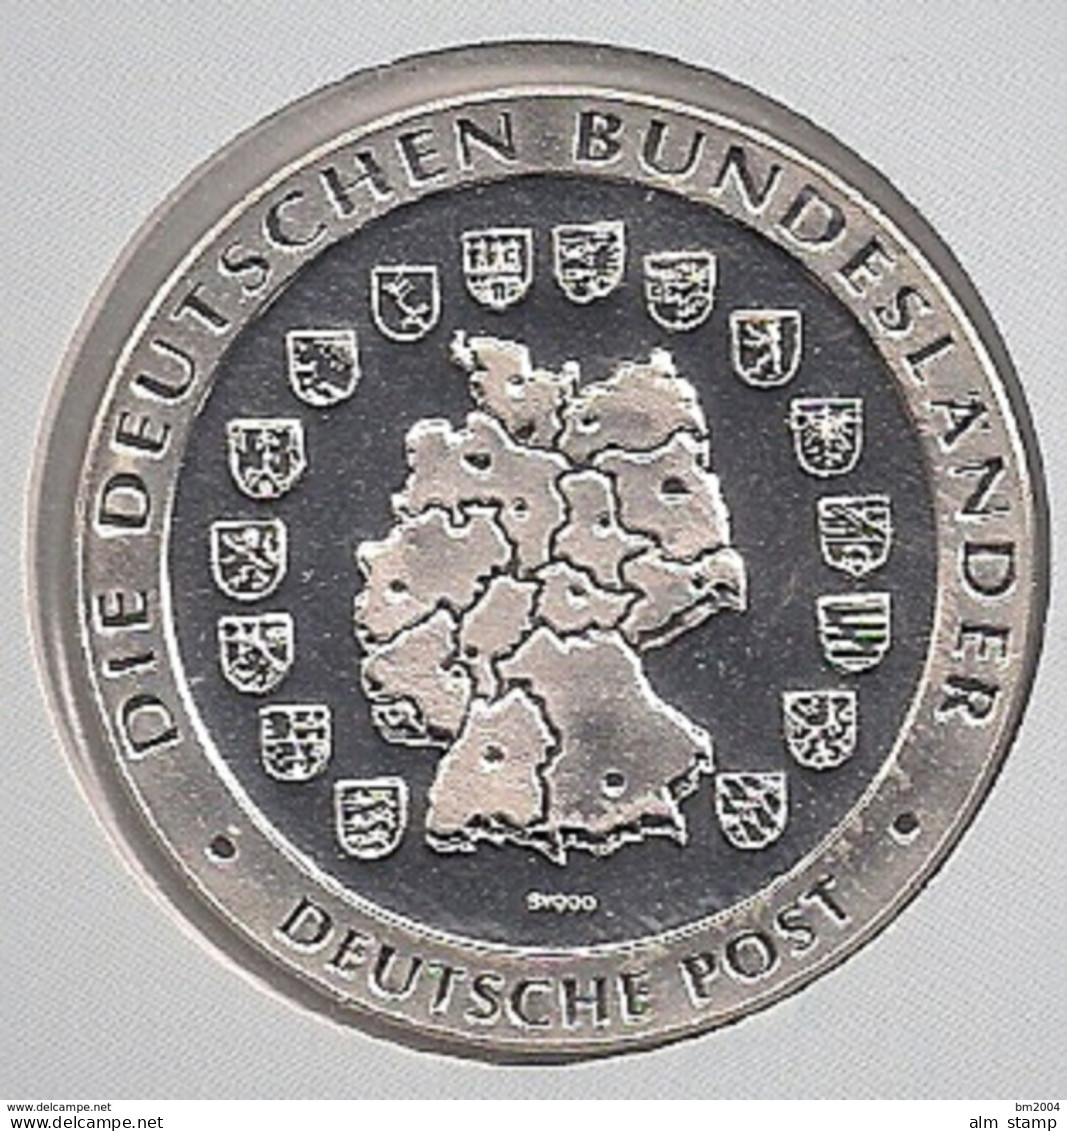 999/1000 Silber Medaille " Thüringen    " PP   36 Mm DMR Rohgewicht : 14 G Prägung : Hochrelief - Souvenirmunten (elongated Coins)